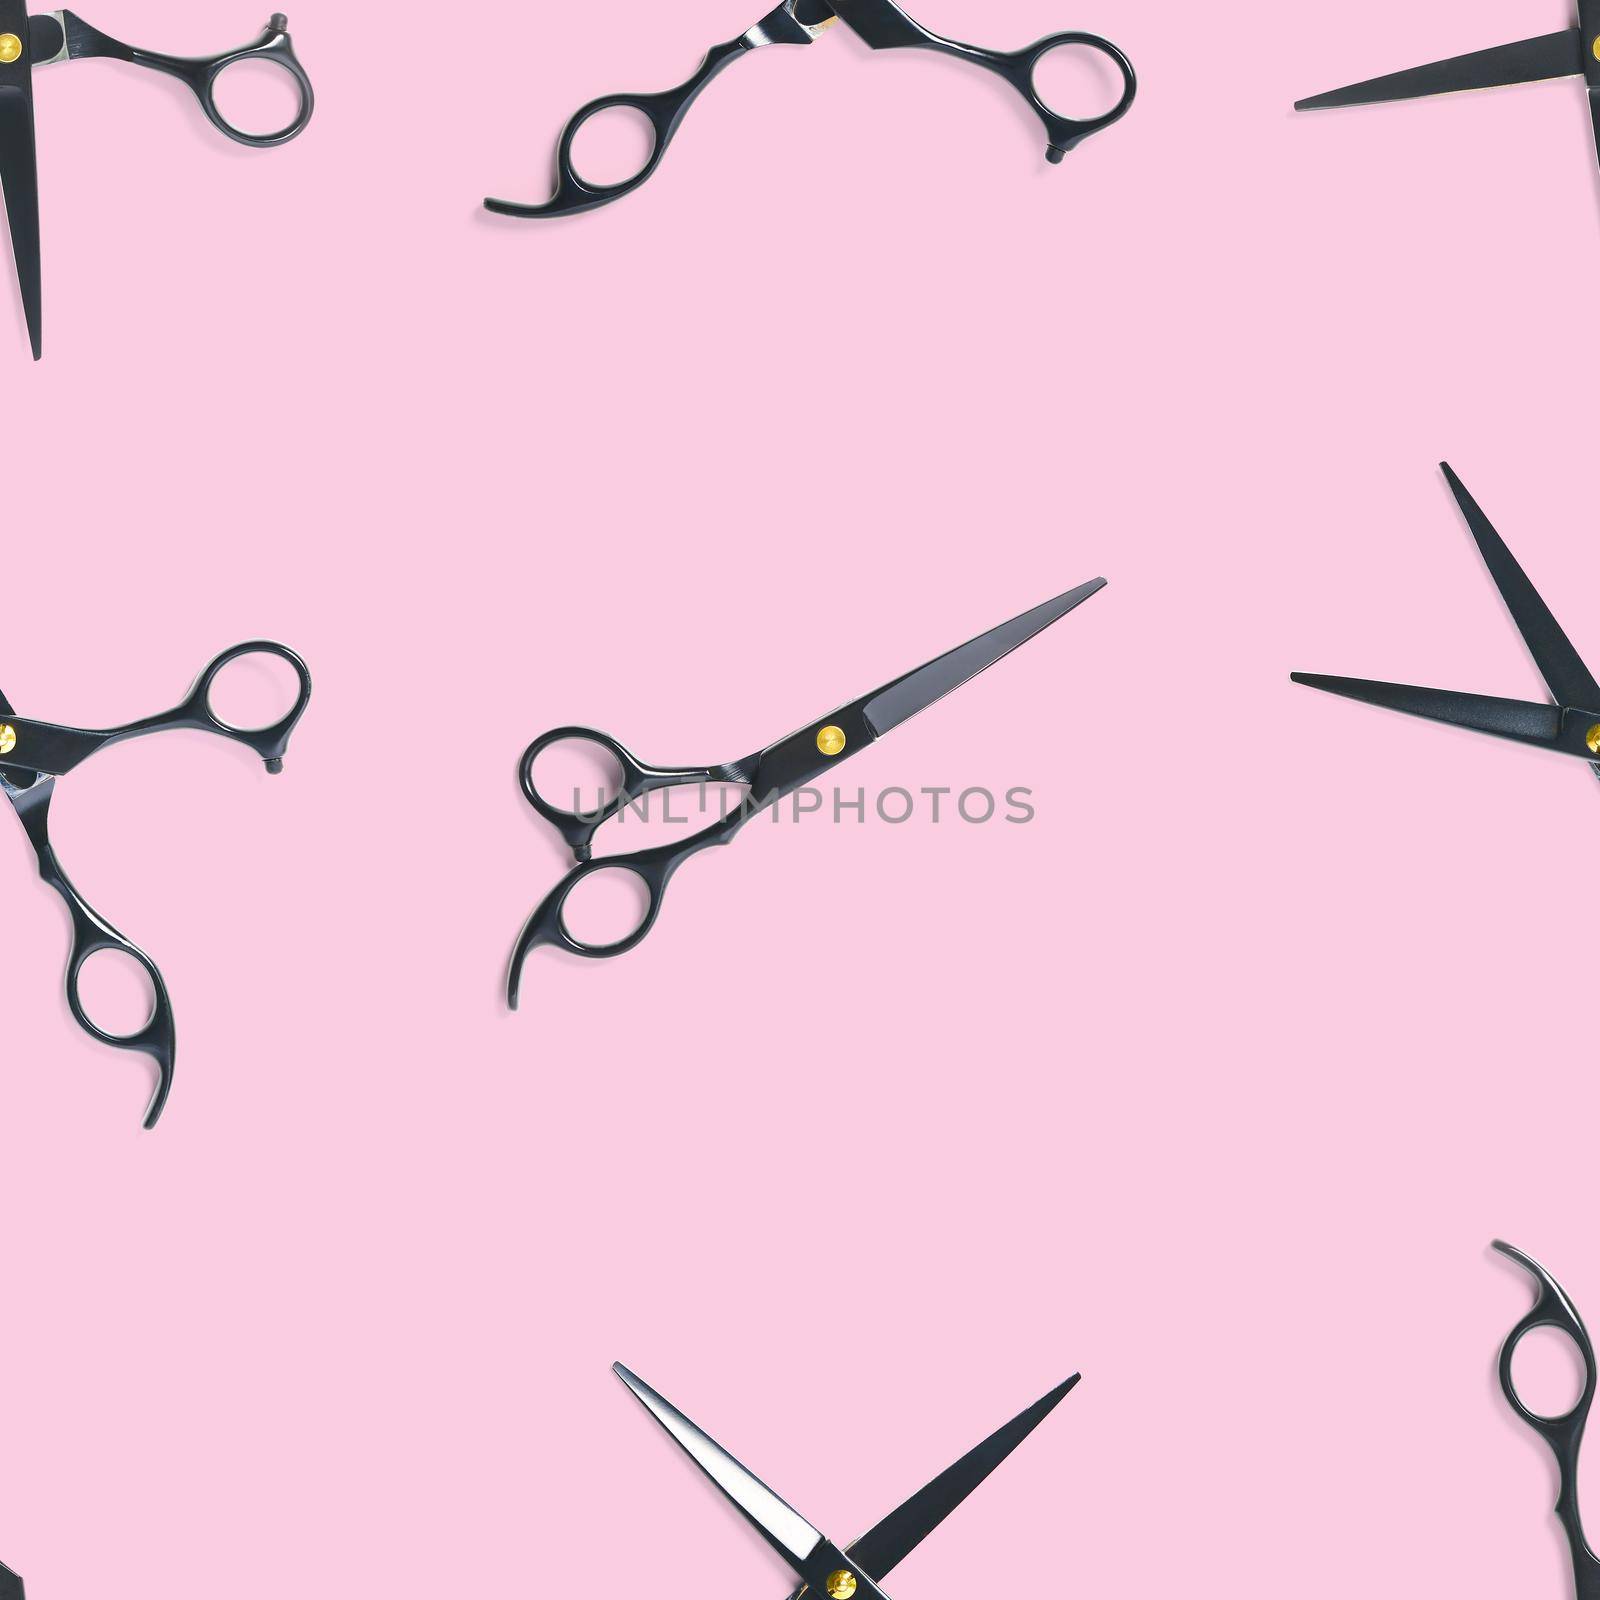 Seamless pattern of black scissors. professional hairdresser black scissors isolated on pink. Black barber scissors, close up. pop art background by PhotoTime